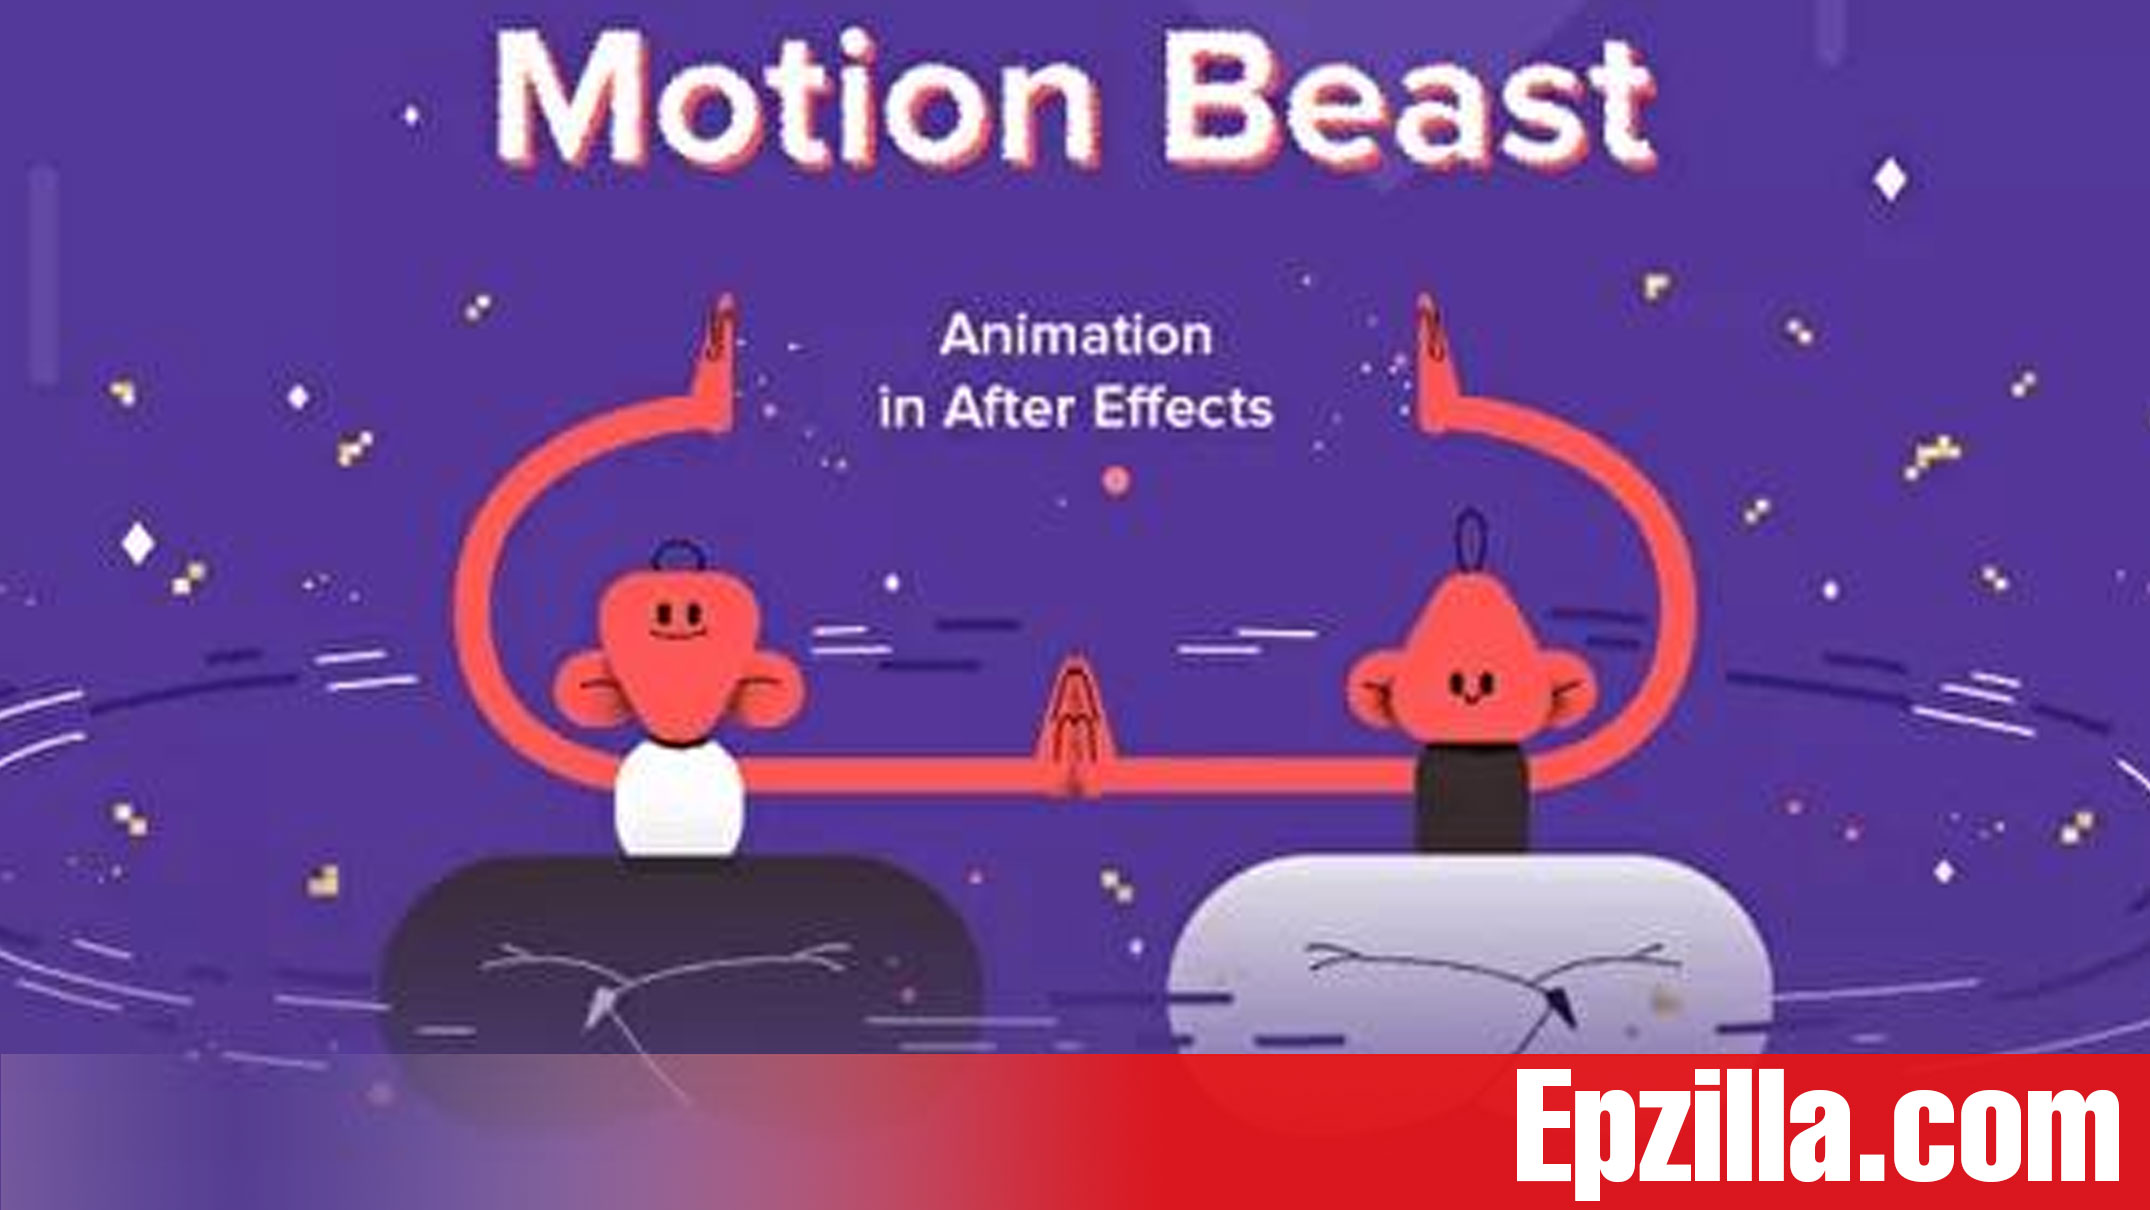 Motion Design School Motion Beast Course Free Download Epzilla.com